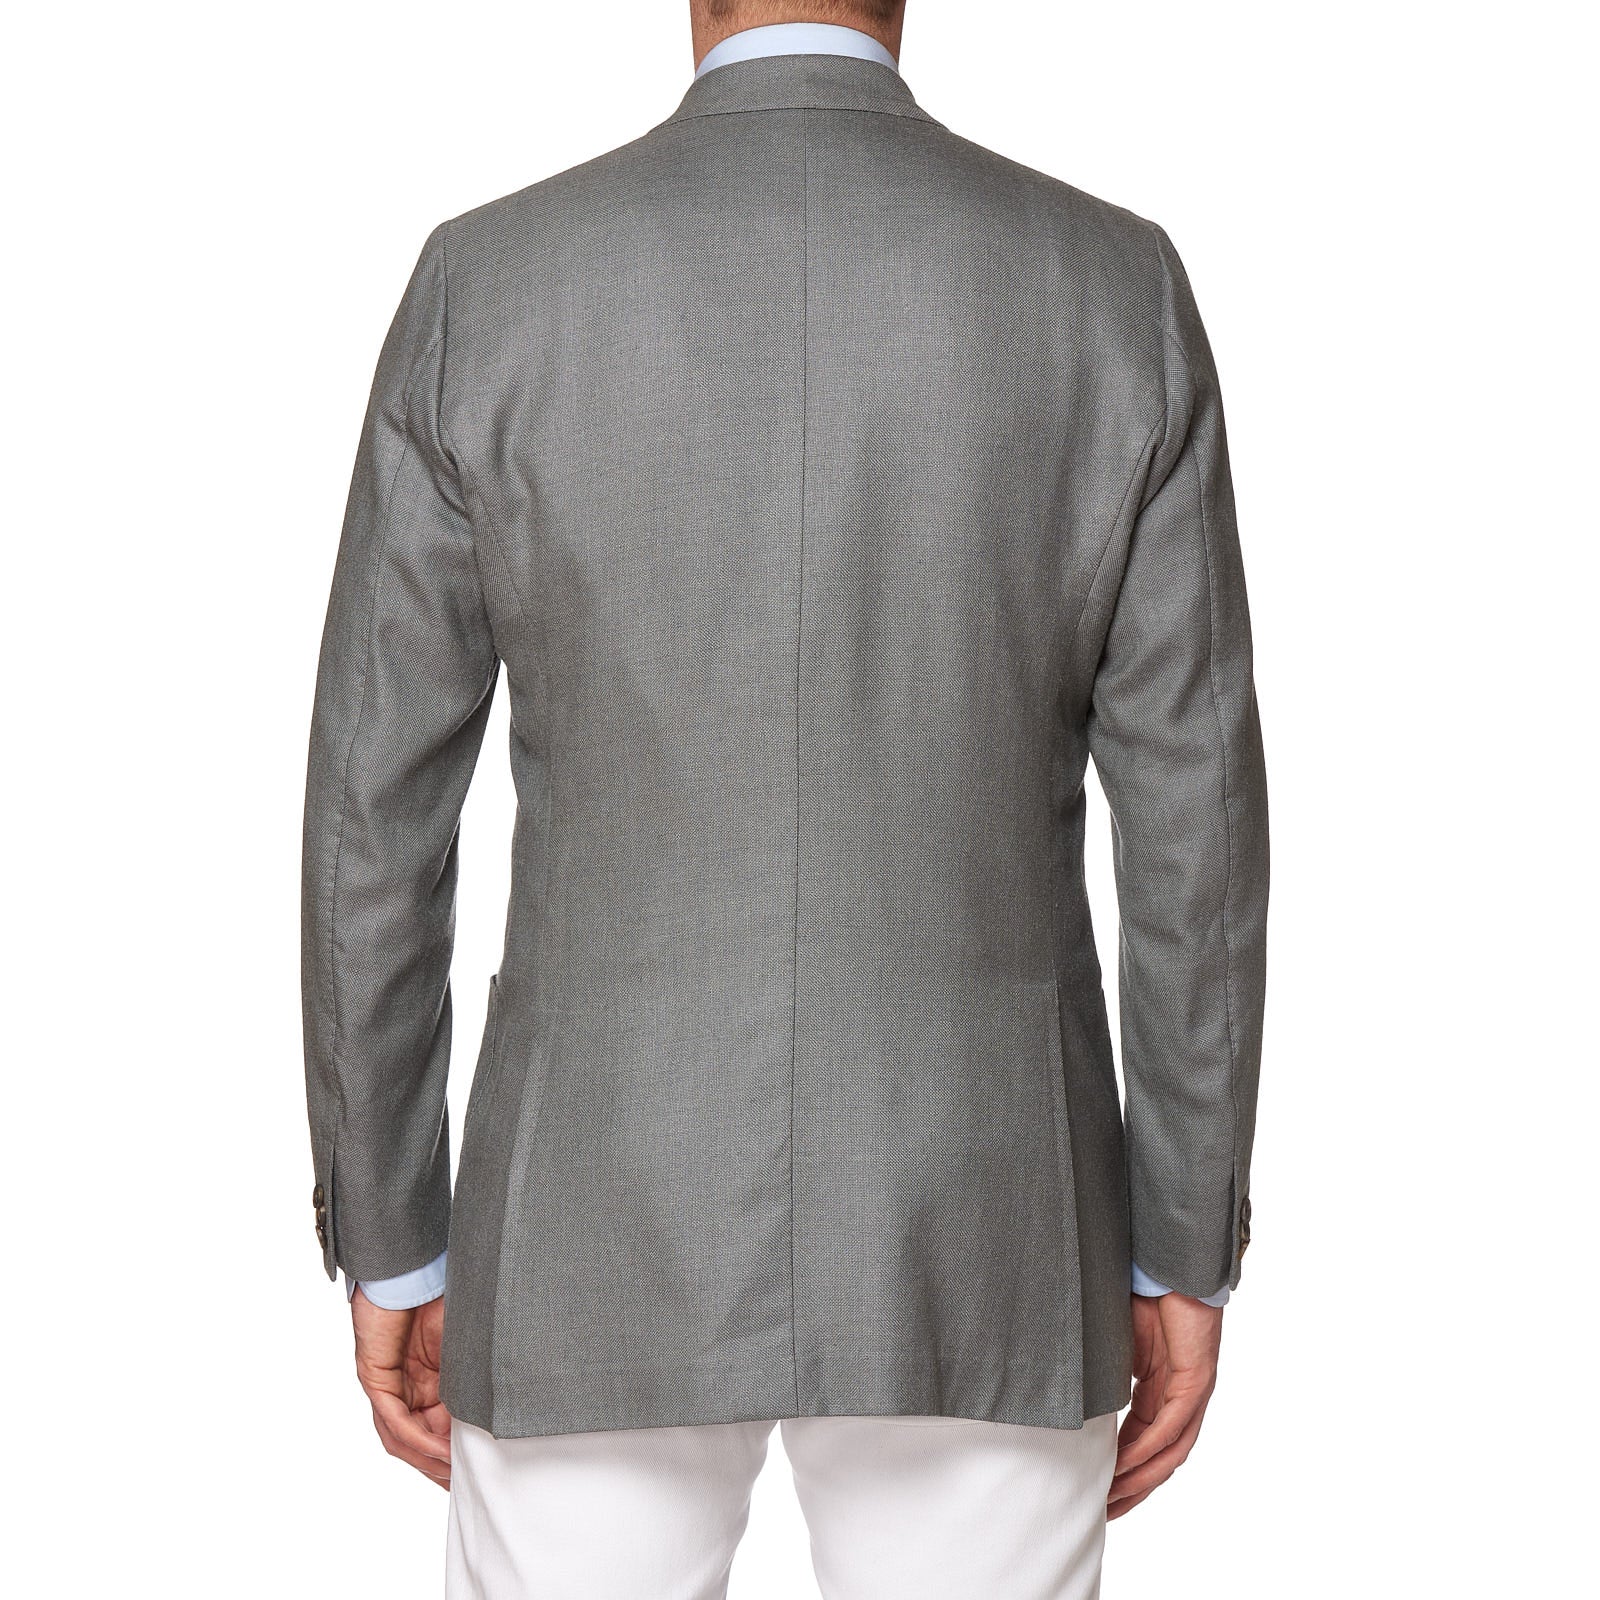 RUBINACCI LH Handmade Bespoke Gray Wool-Silk-Cashmere DB Jacket EU 50 NEW US 40 RUBINACCI